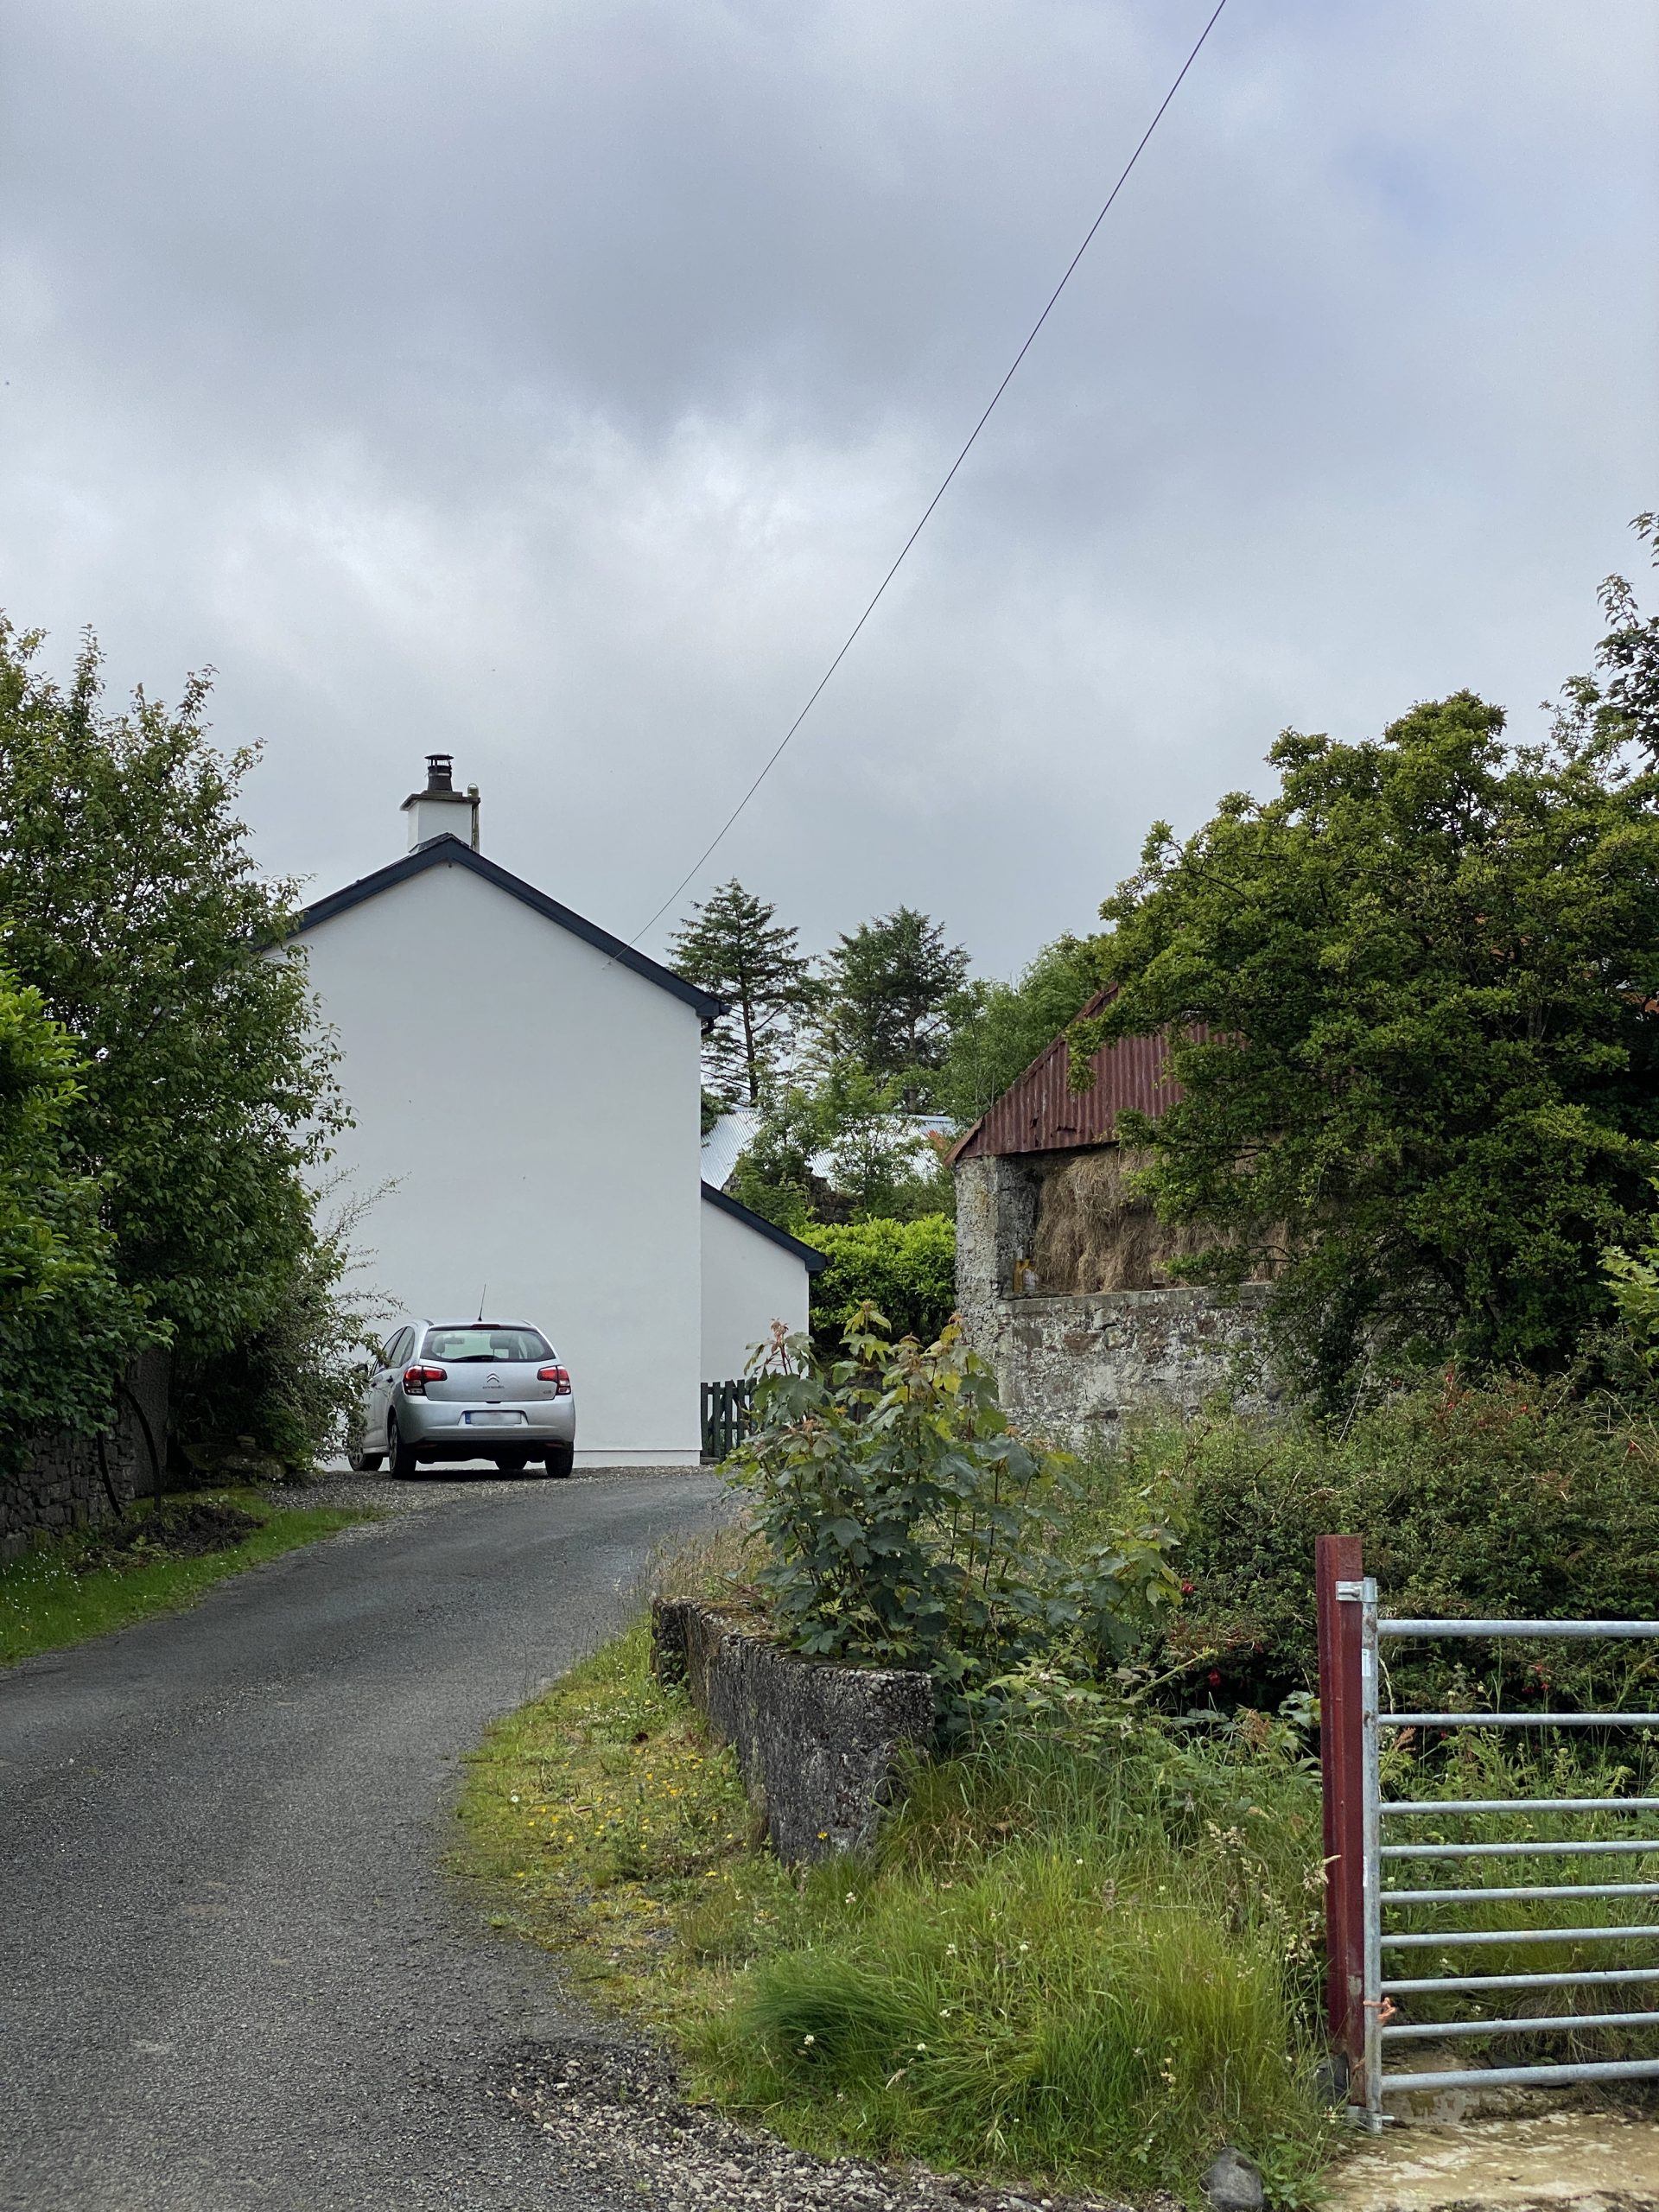 Rural renovation near Kerrykeel, Co. Donegal